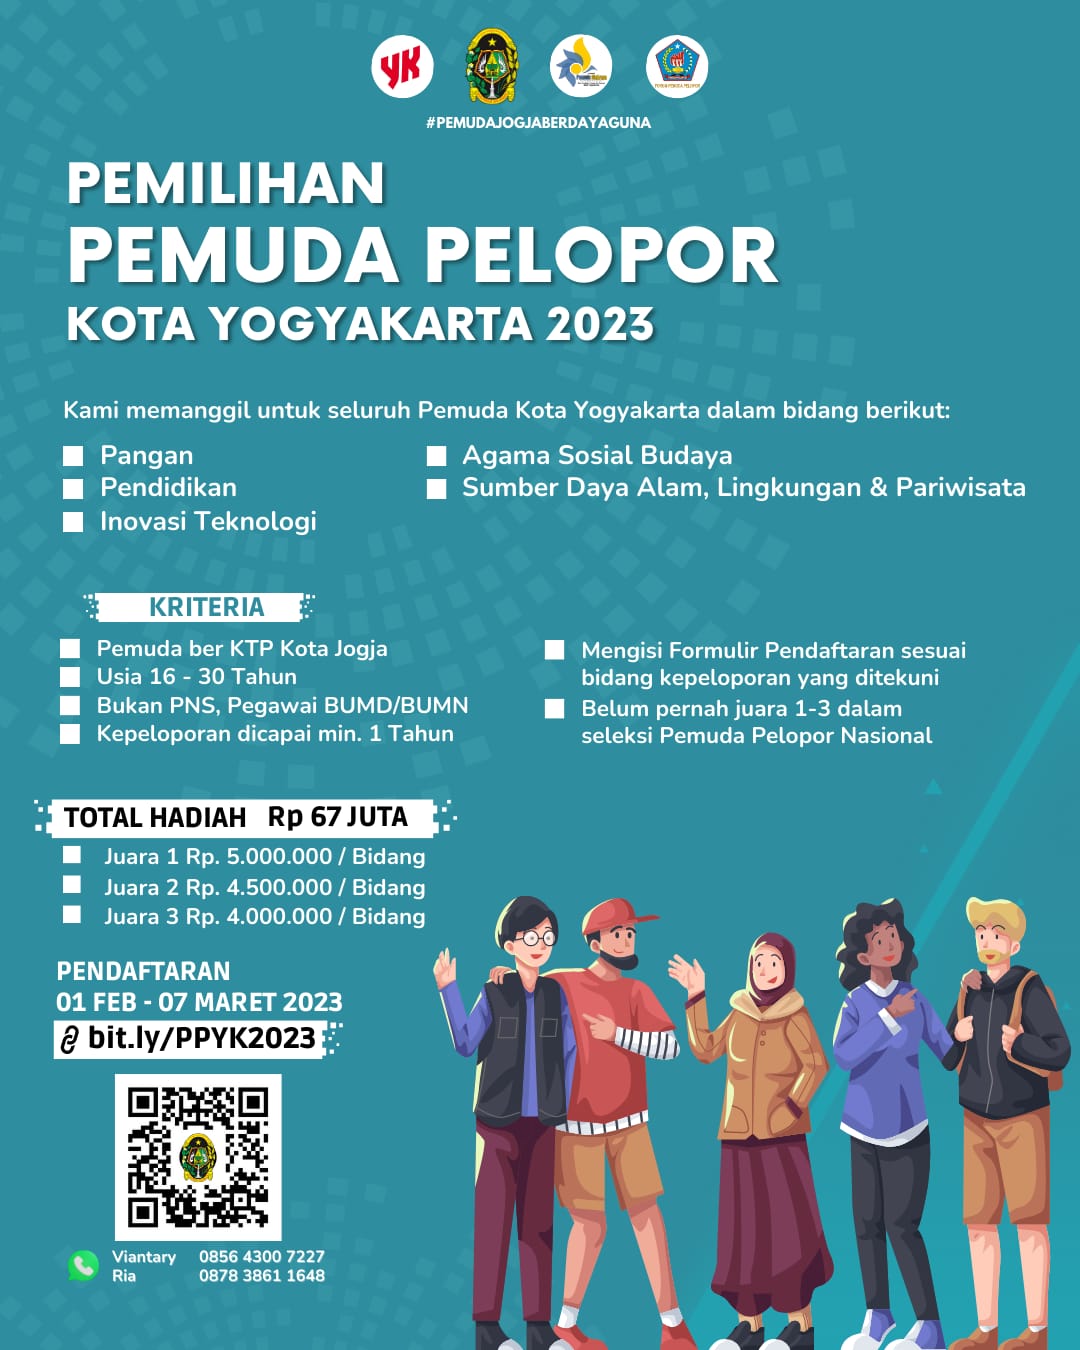 Pemilihan Pemuda Pelopor tingkat Kota Yogyakarta